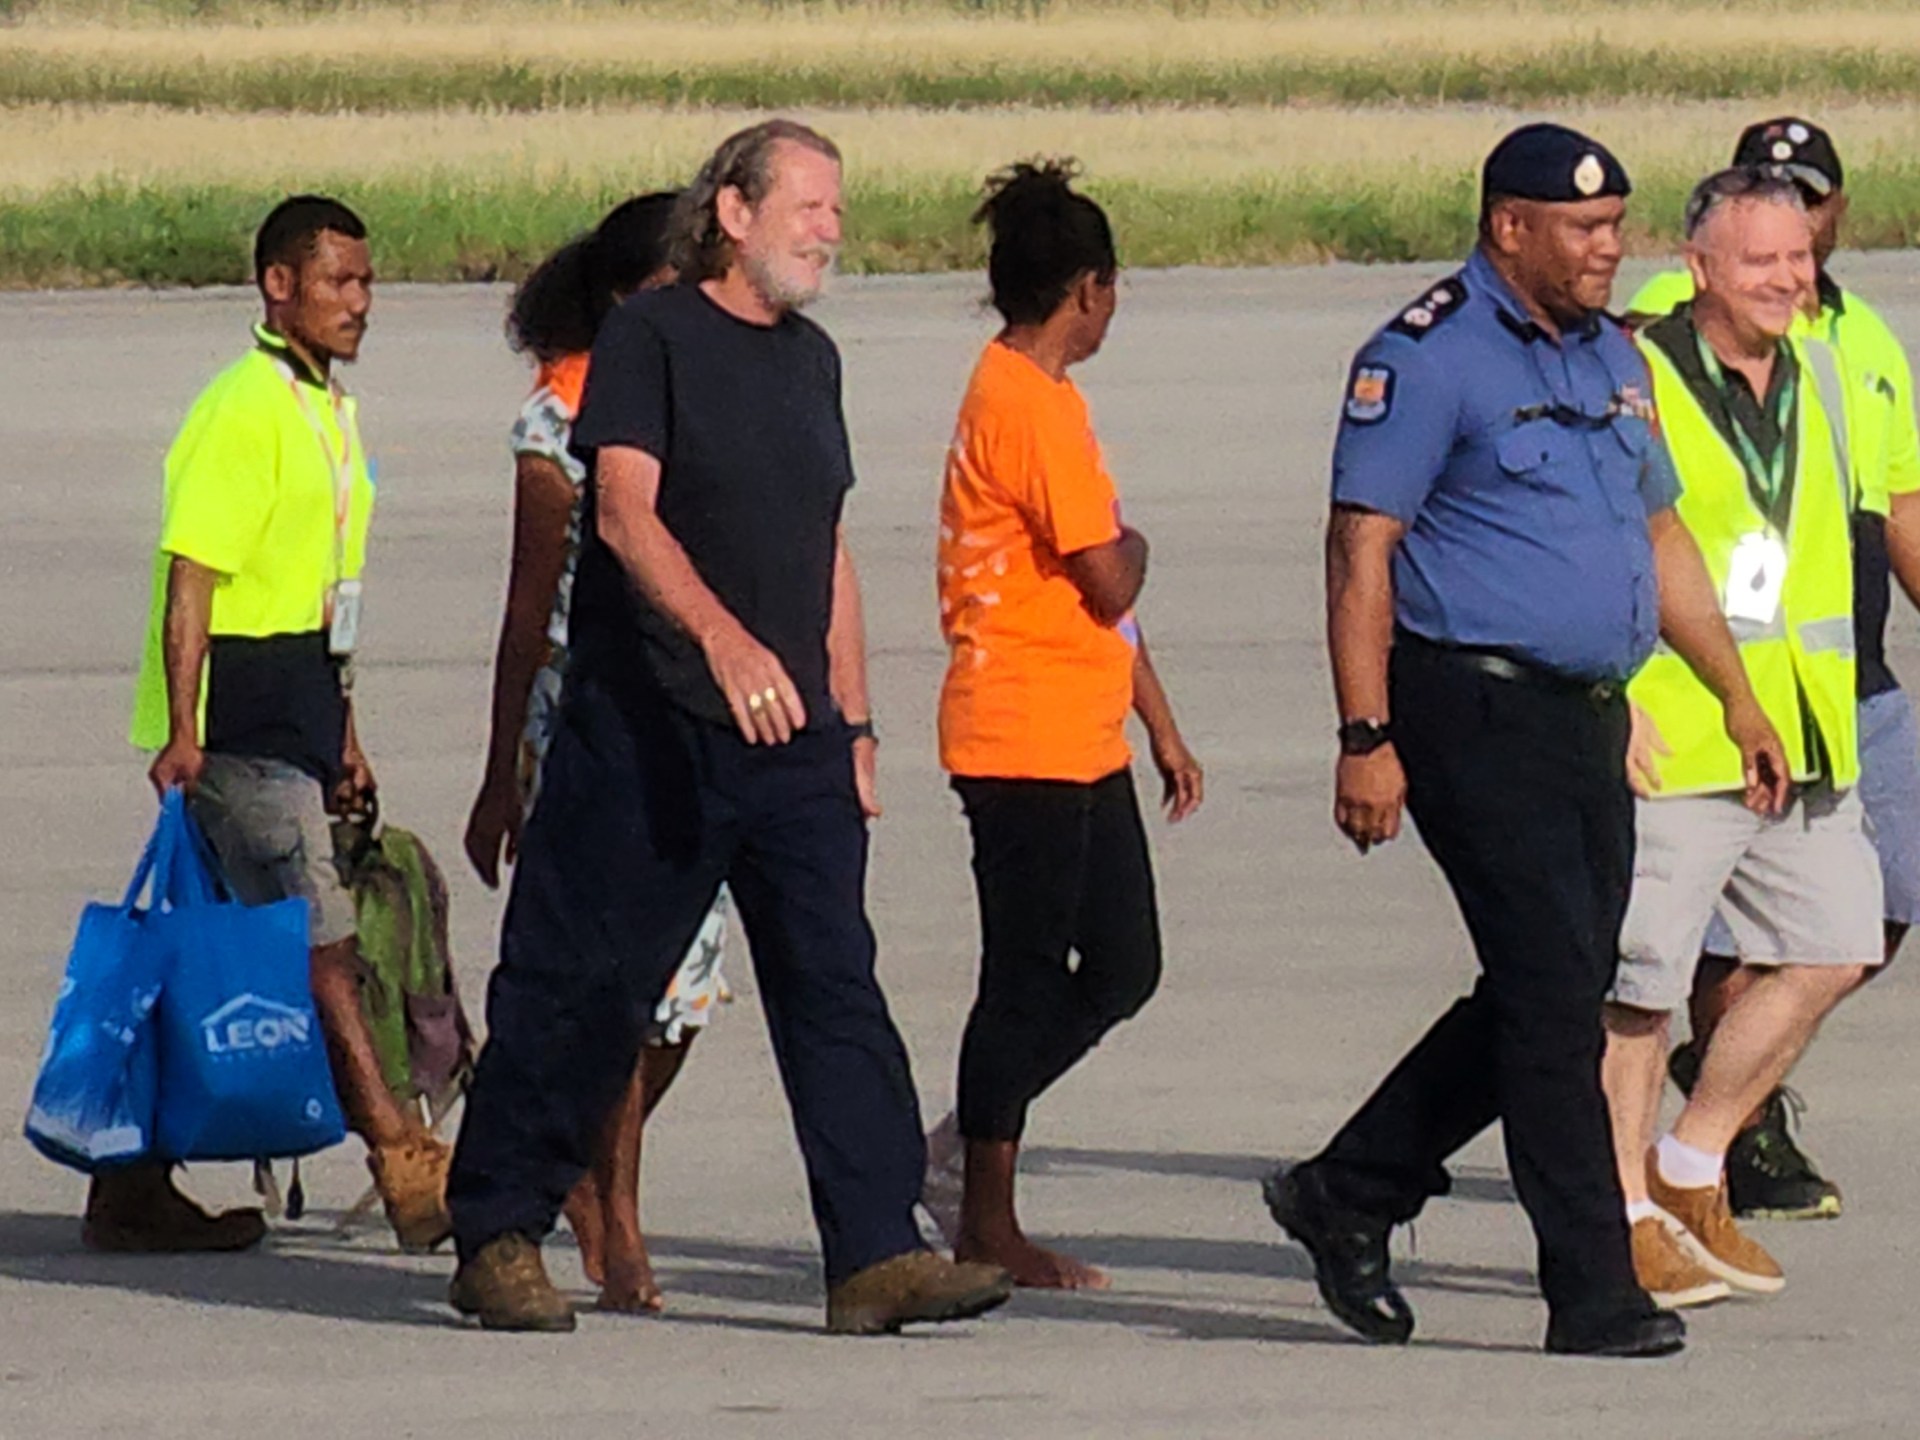 Sandera dibebaskan setelah ditahan selama seminggu di Papua Nugini |  Berita Kejahatan